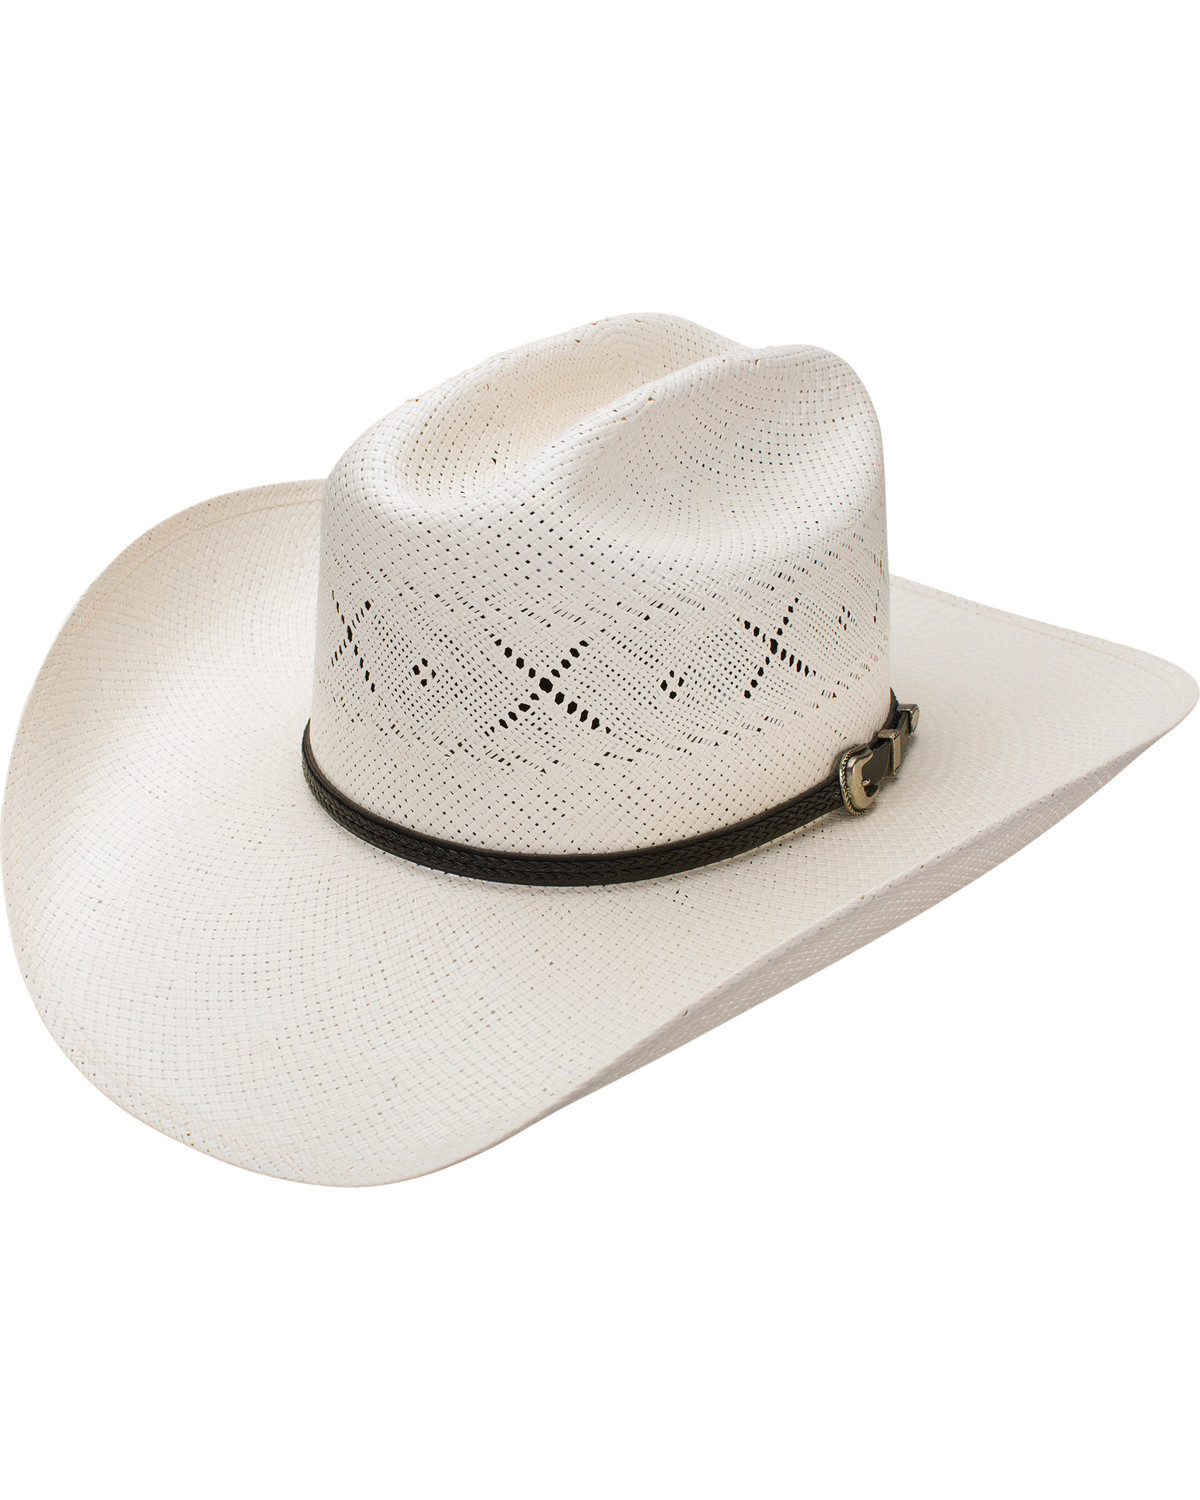 George Strait by Resistol All My Ex's 20X Straw Cowboy Hat